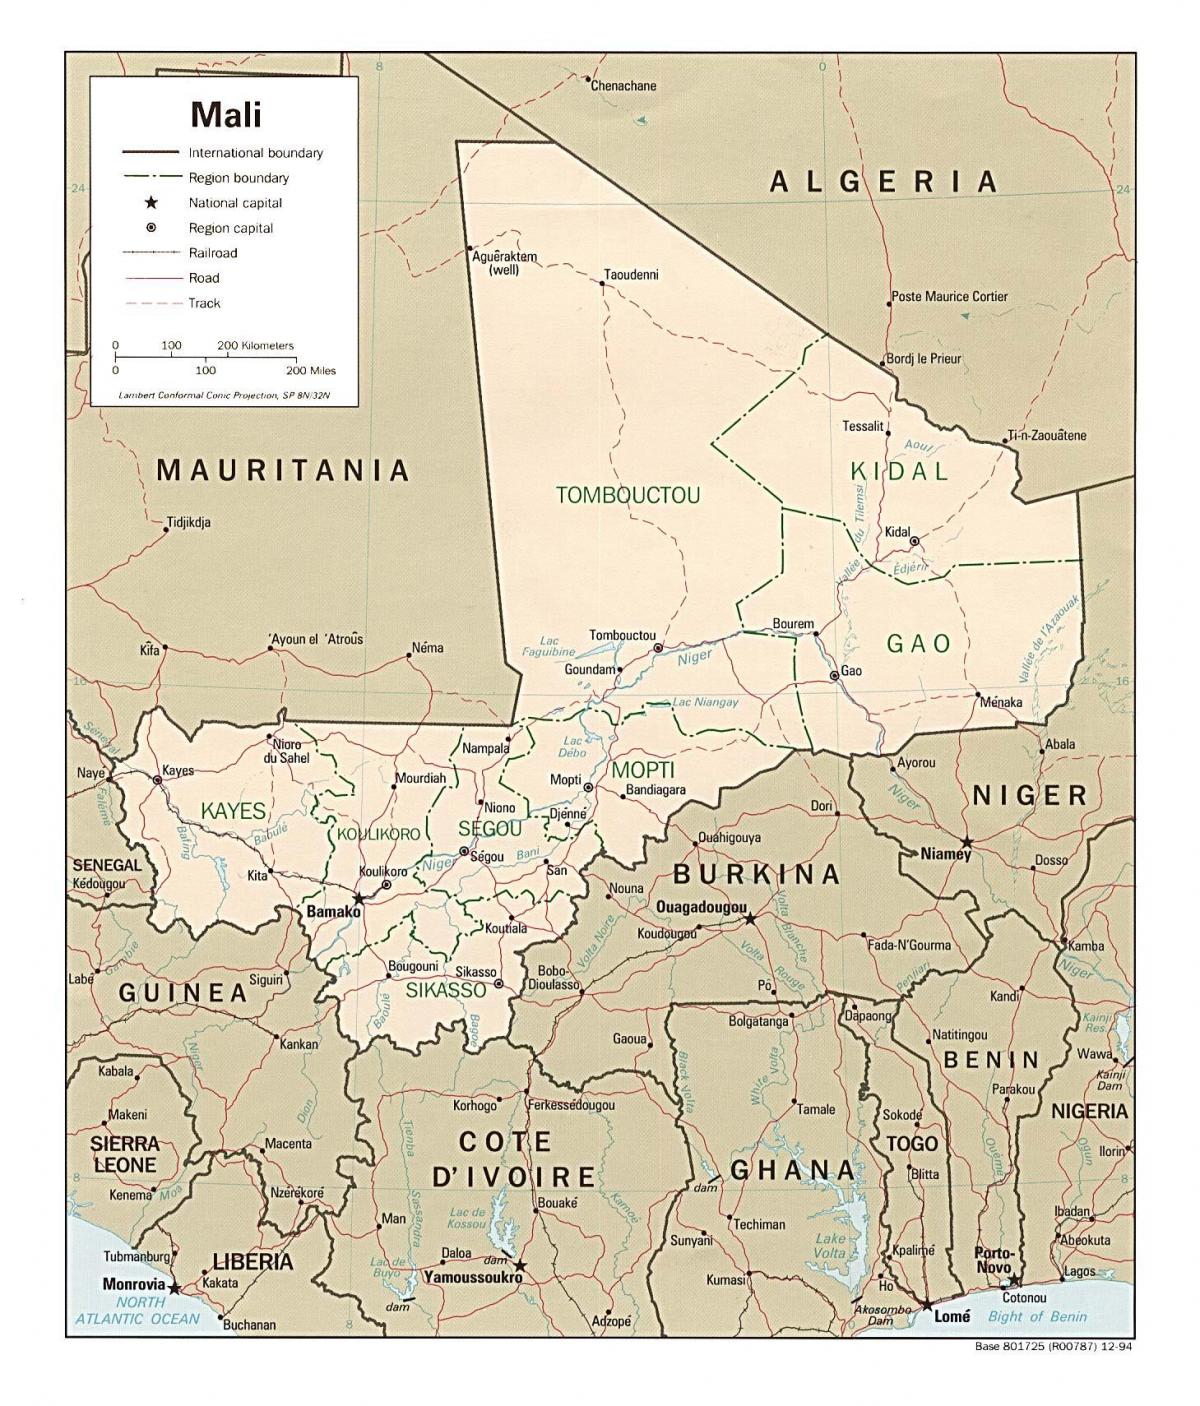 Kort over Mali land